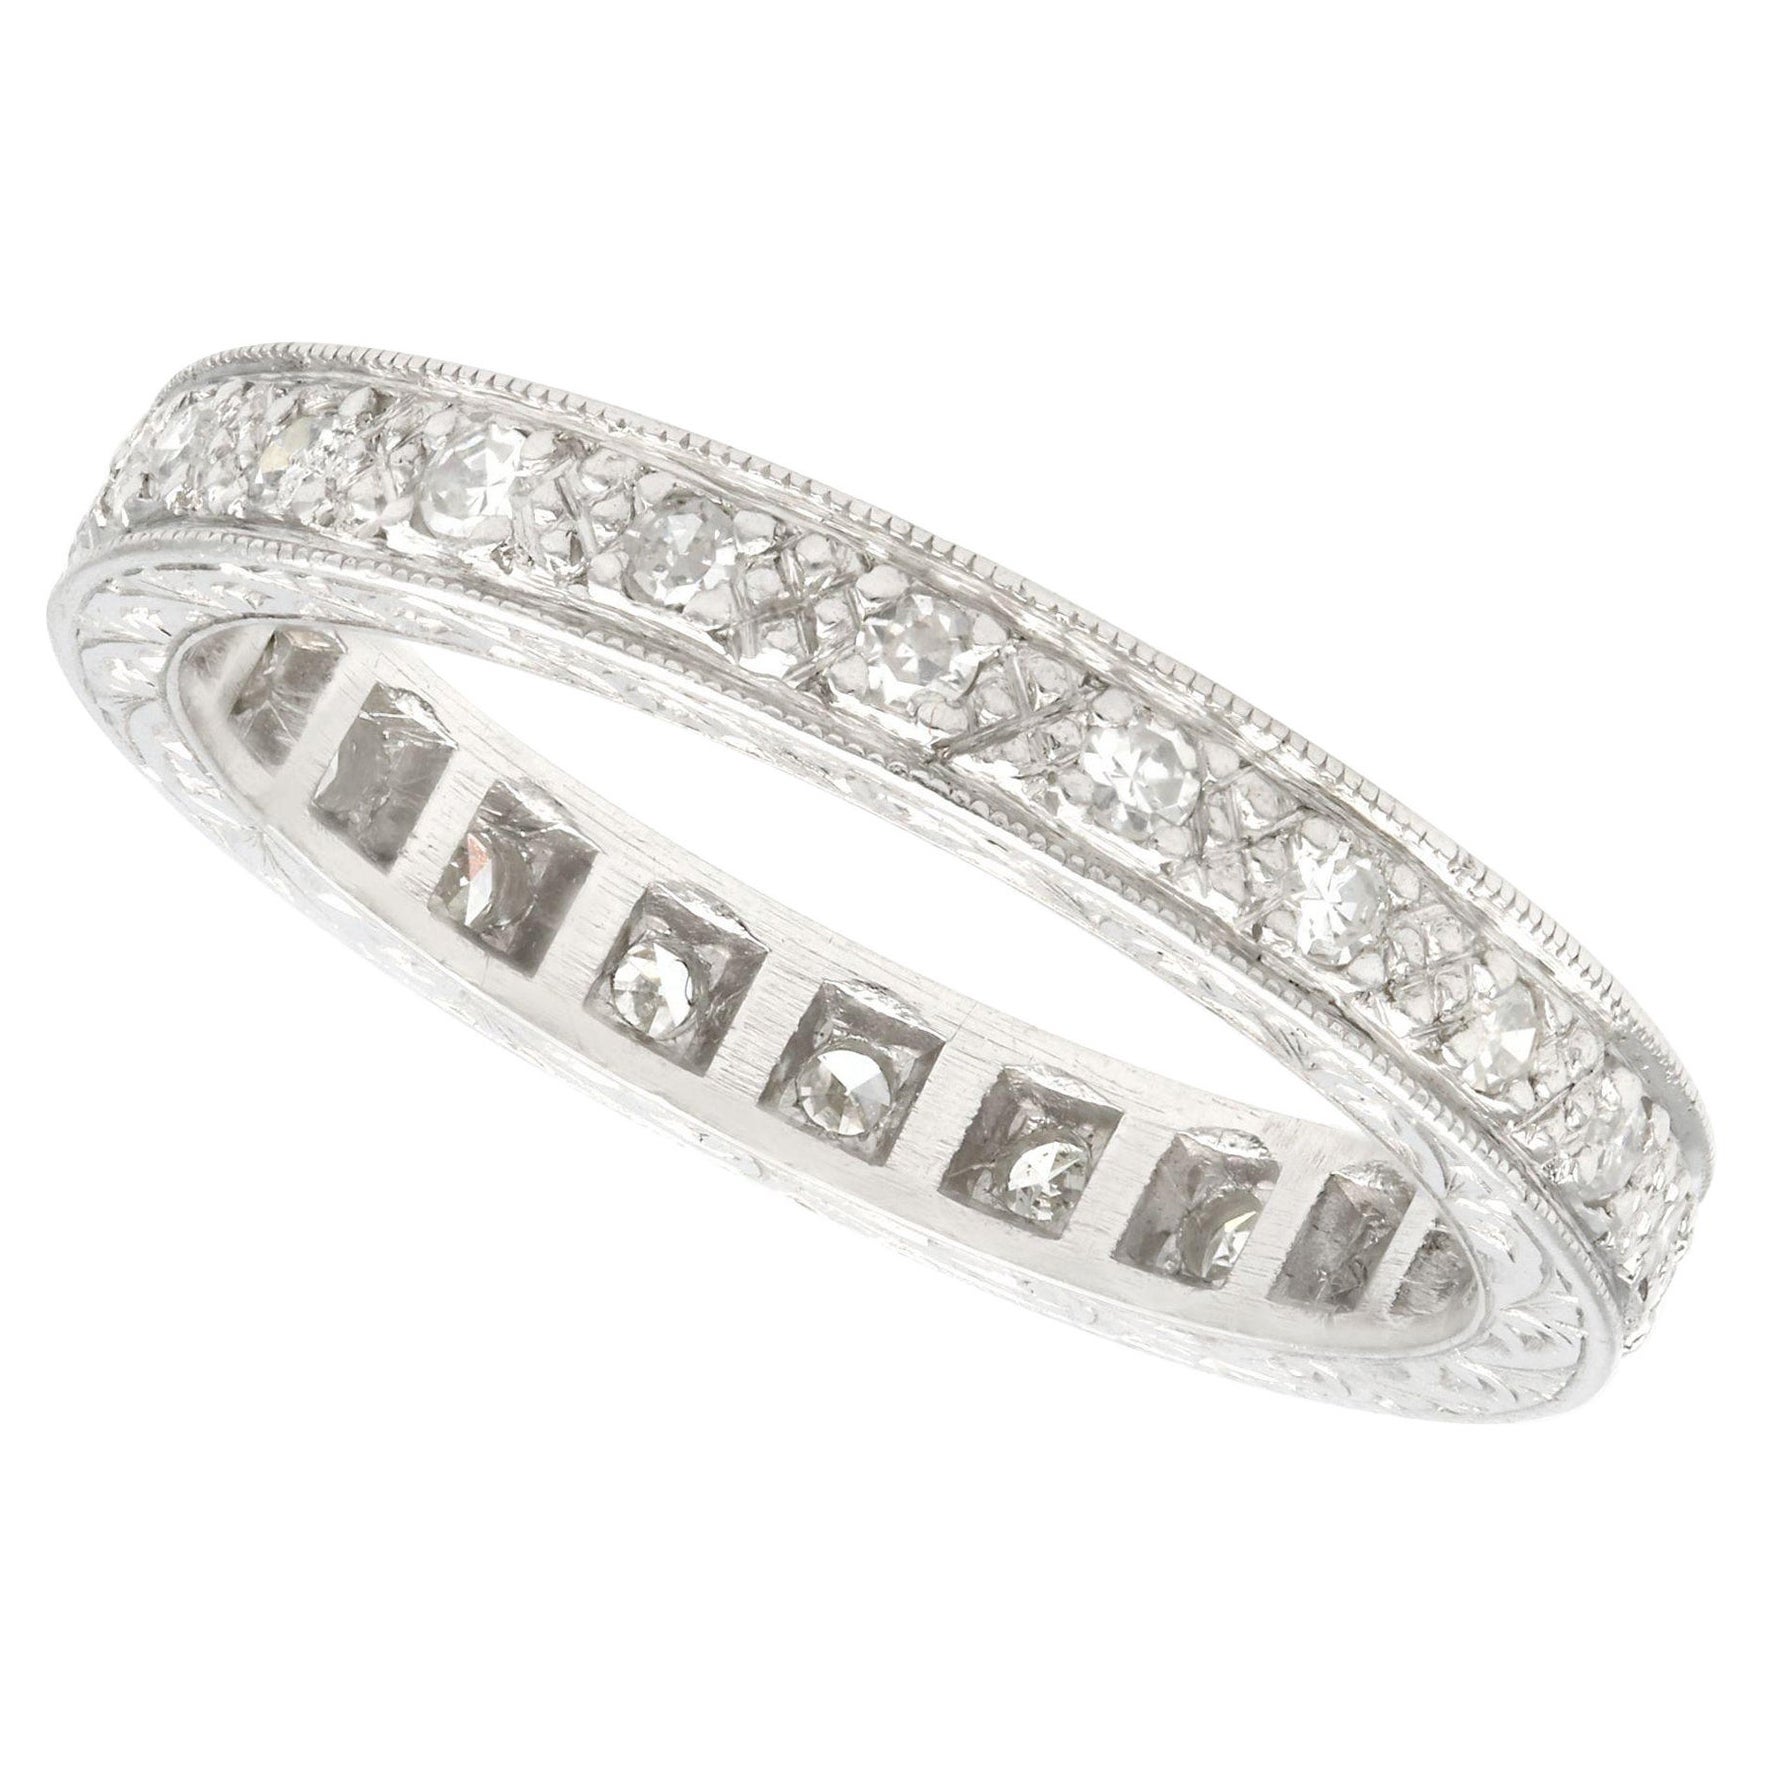 Vintage 1950s Diamond and Platinum Full Eternity Ring